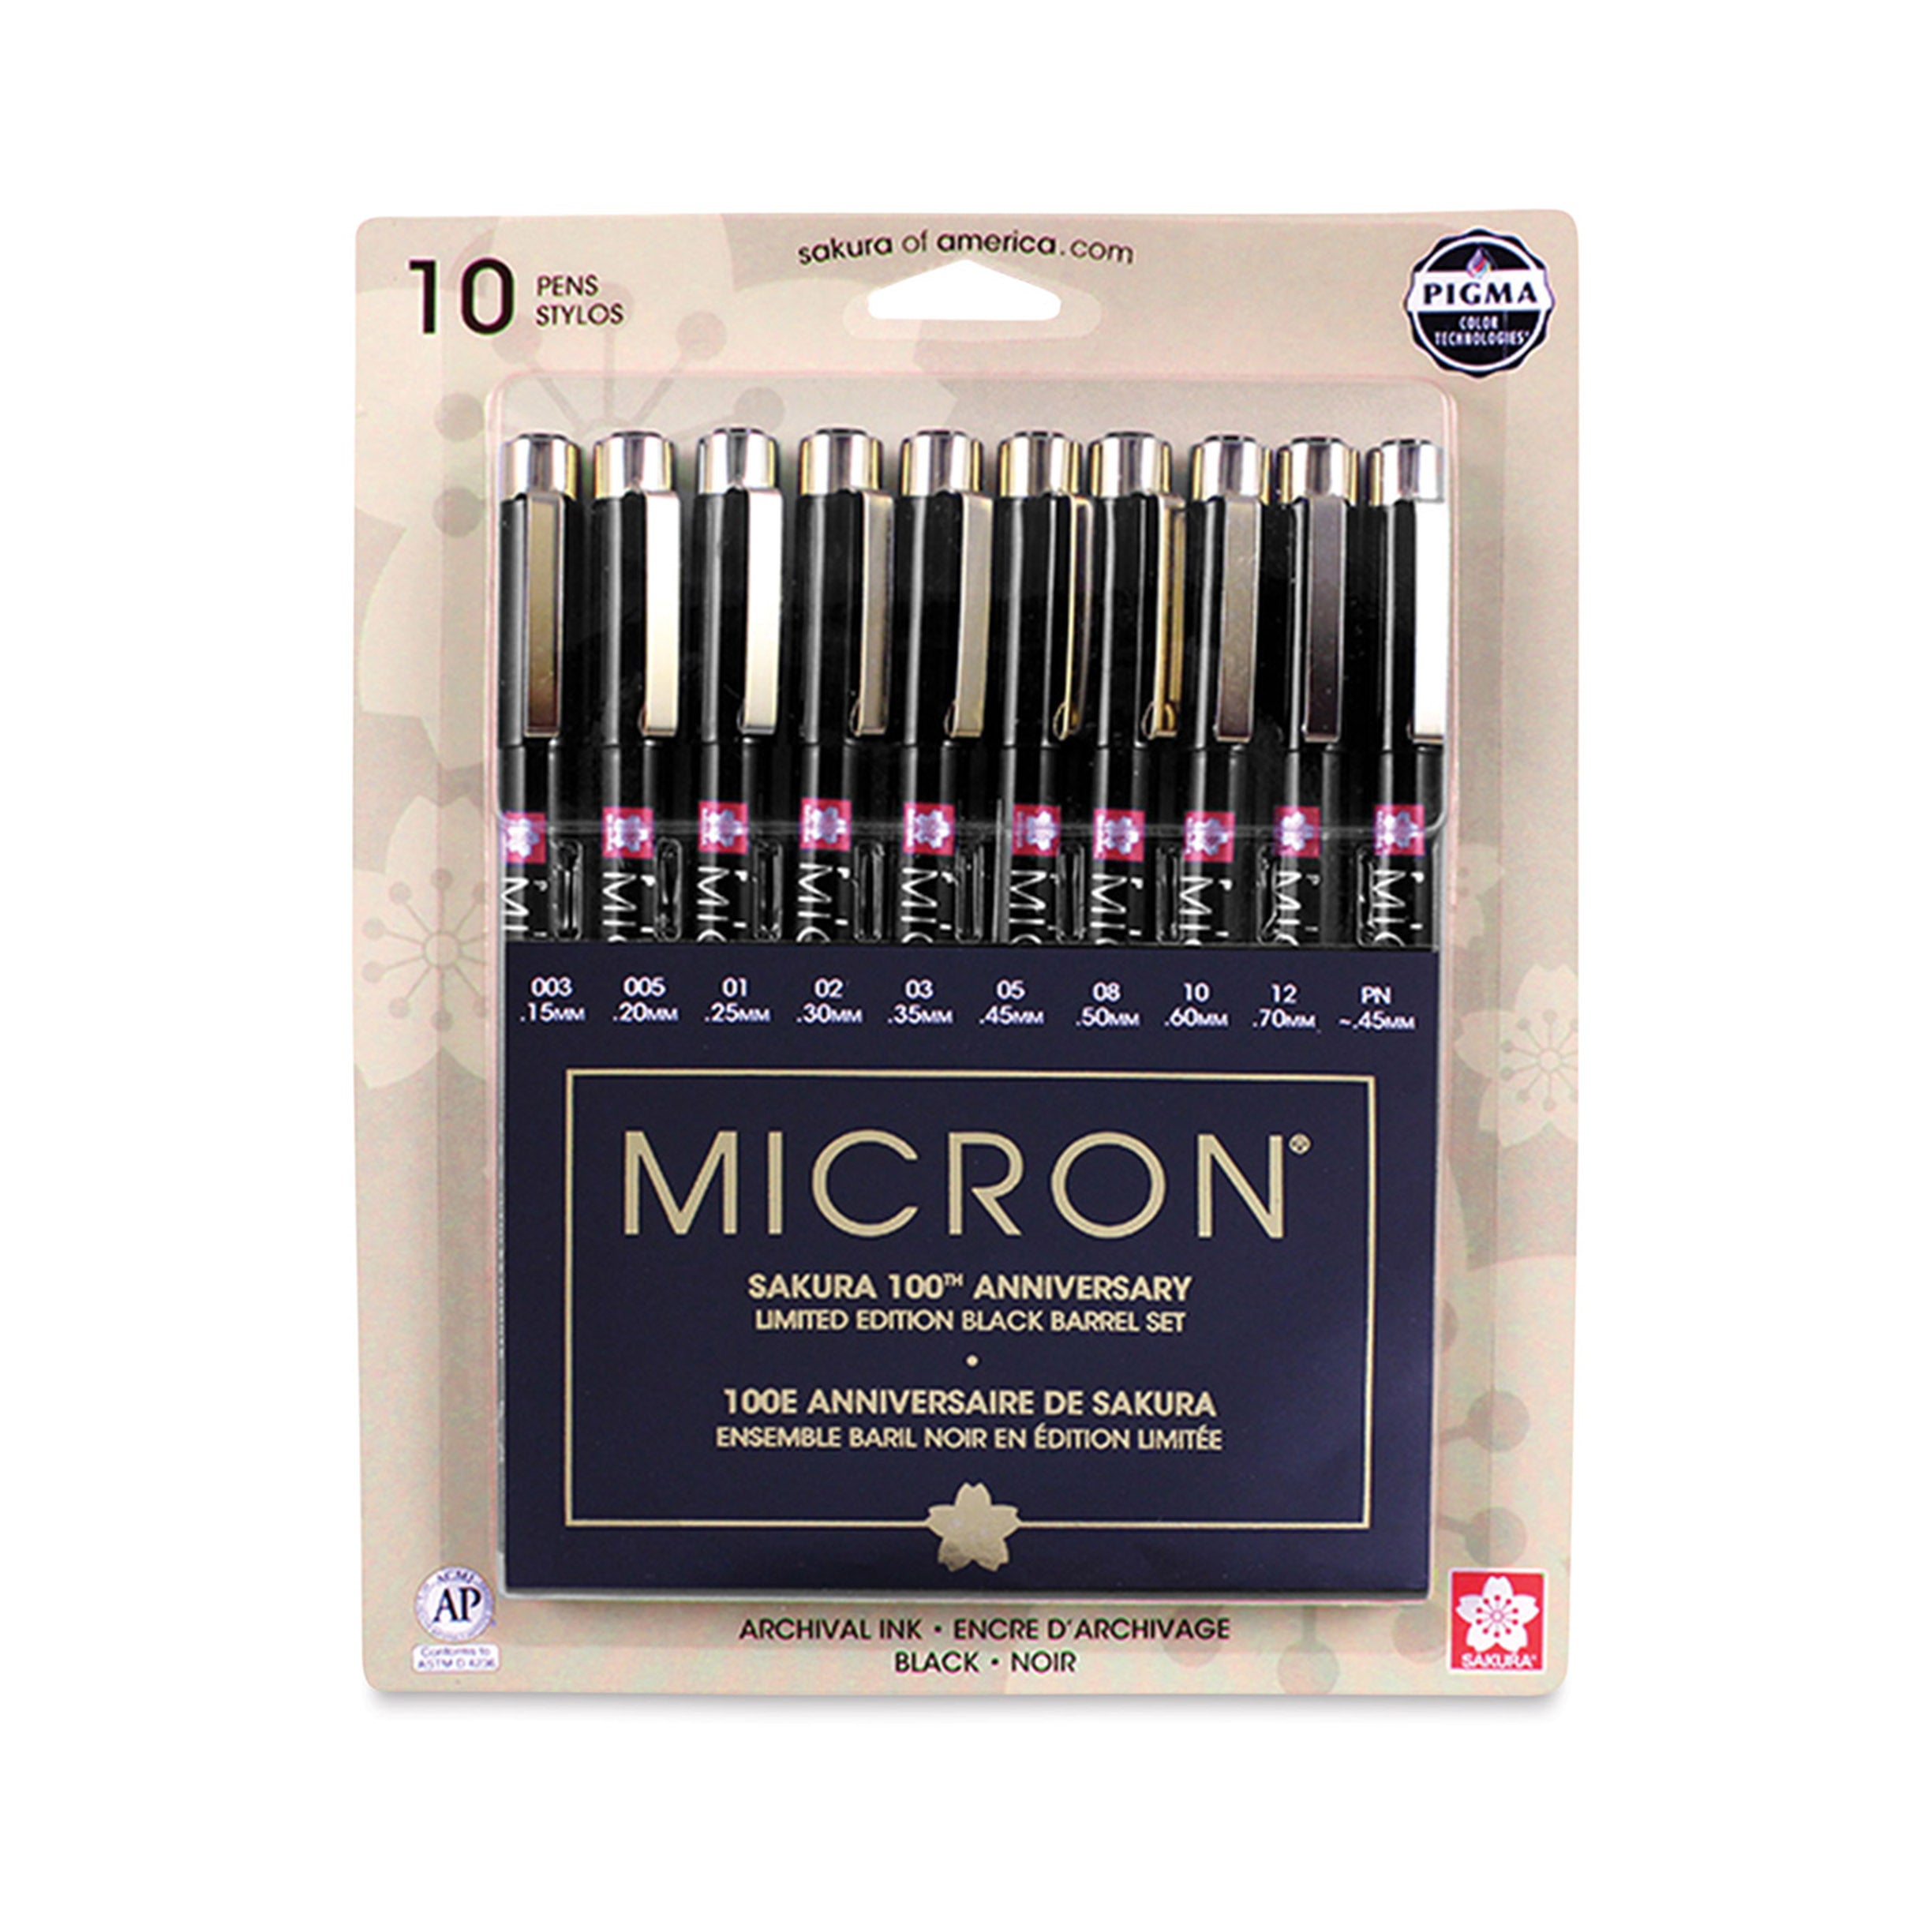 Sakura Micron Pens, 100th Anniversary of 10 — ArtSnacks